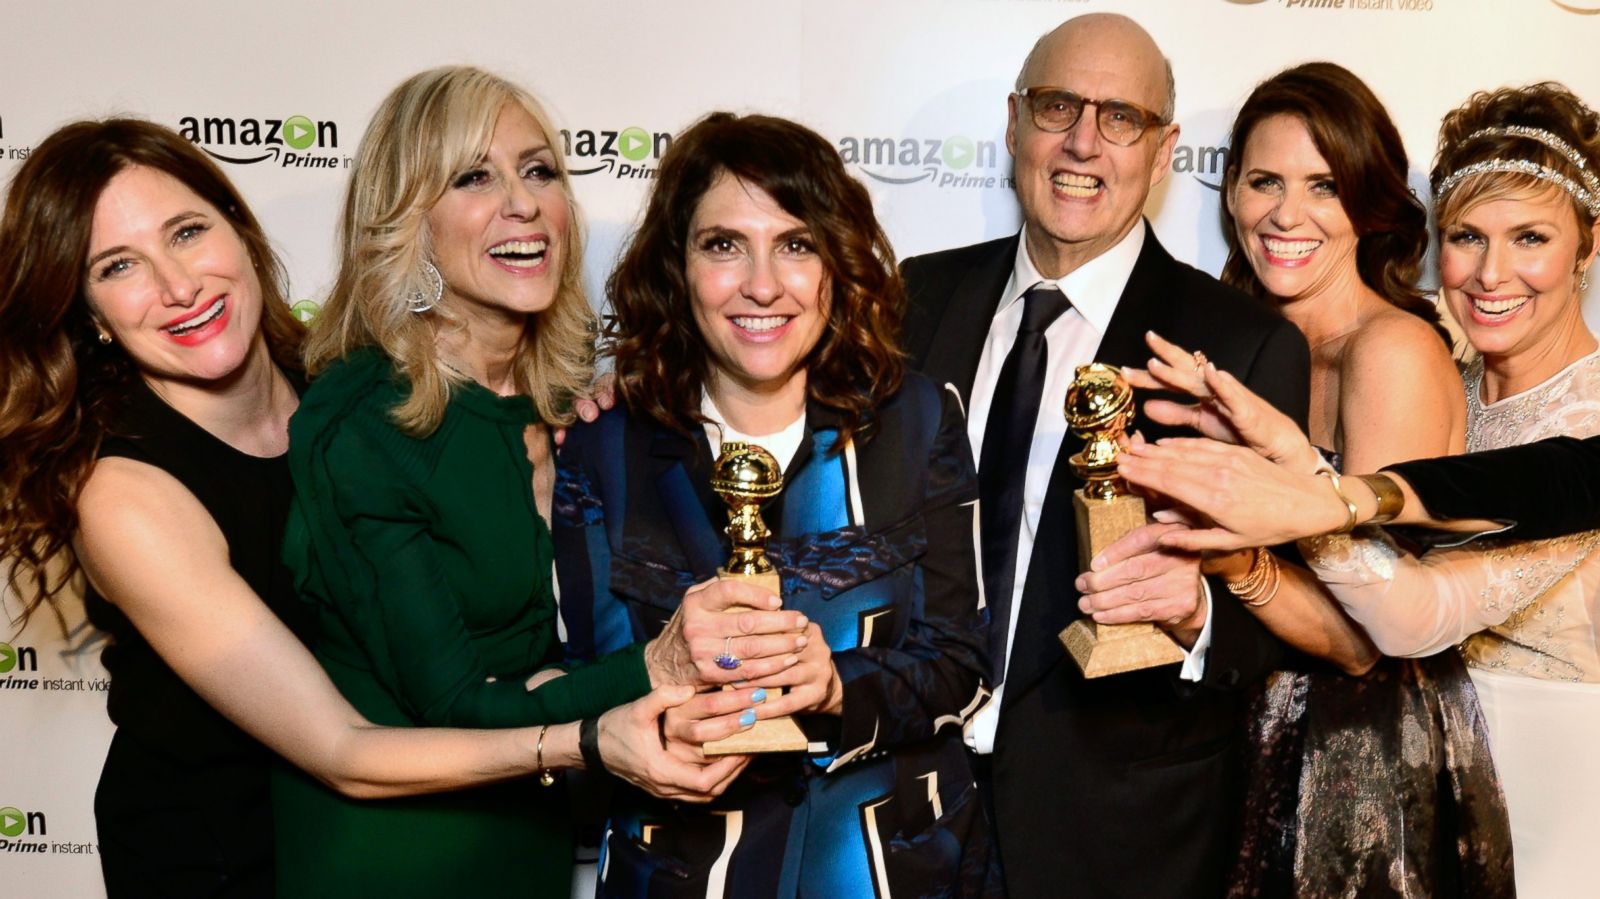 GLAAD Media Awards Nominations 2023: List Of Film, TV, Journalism